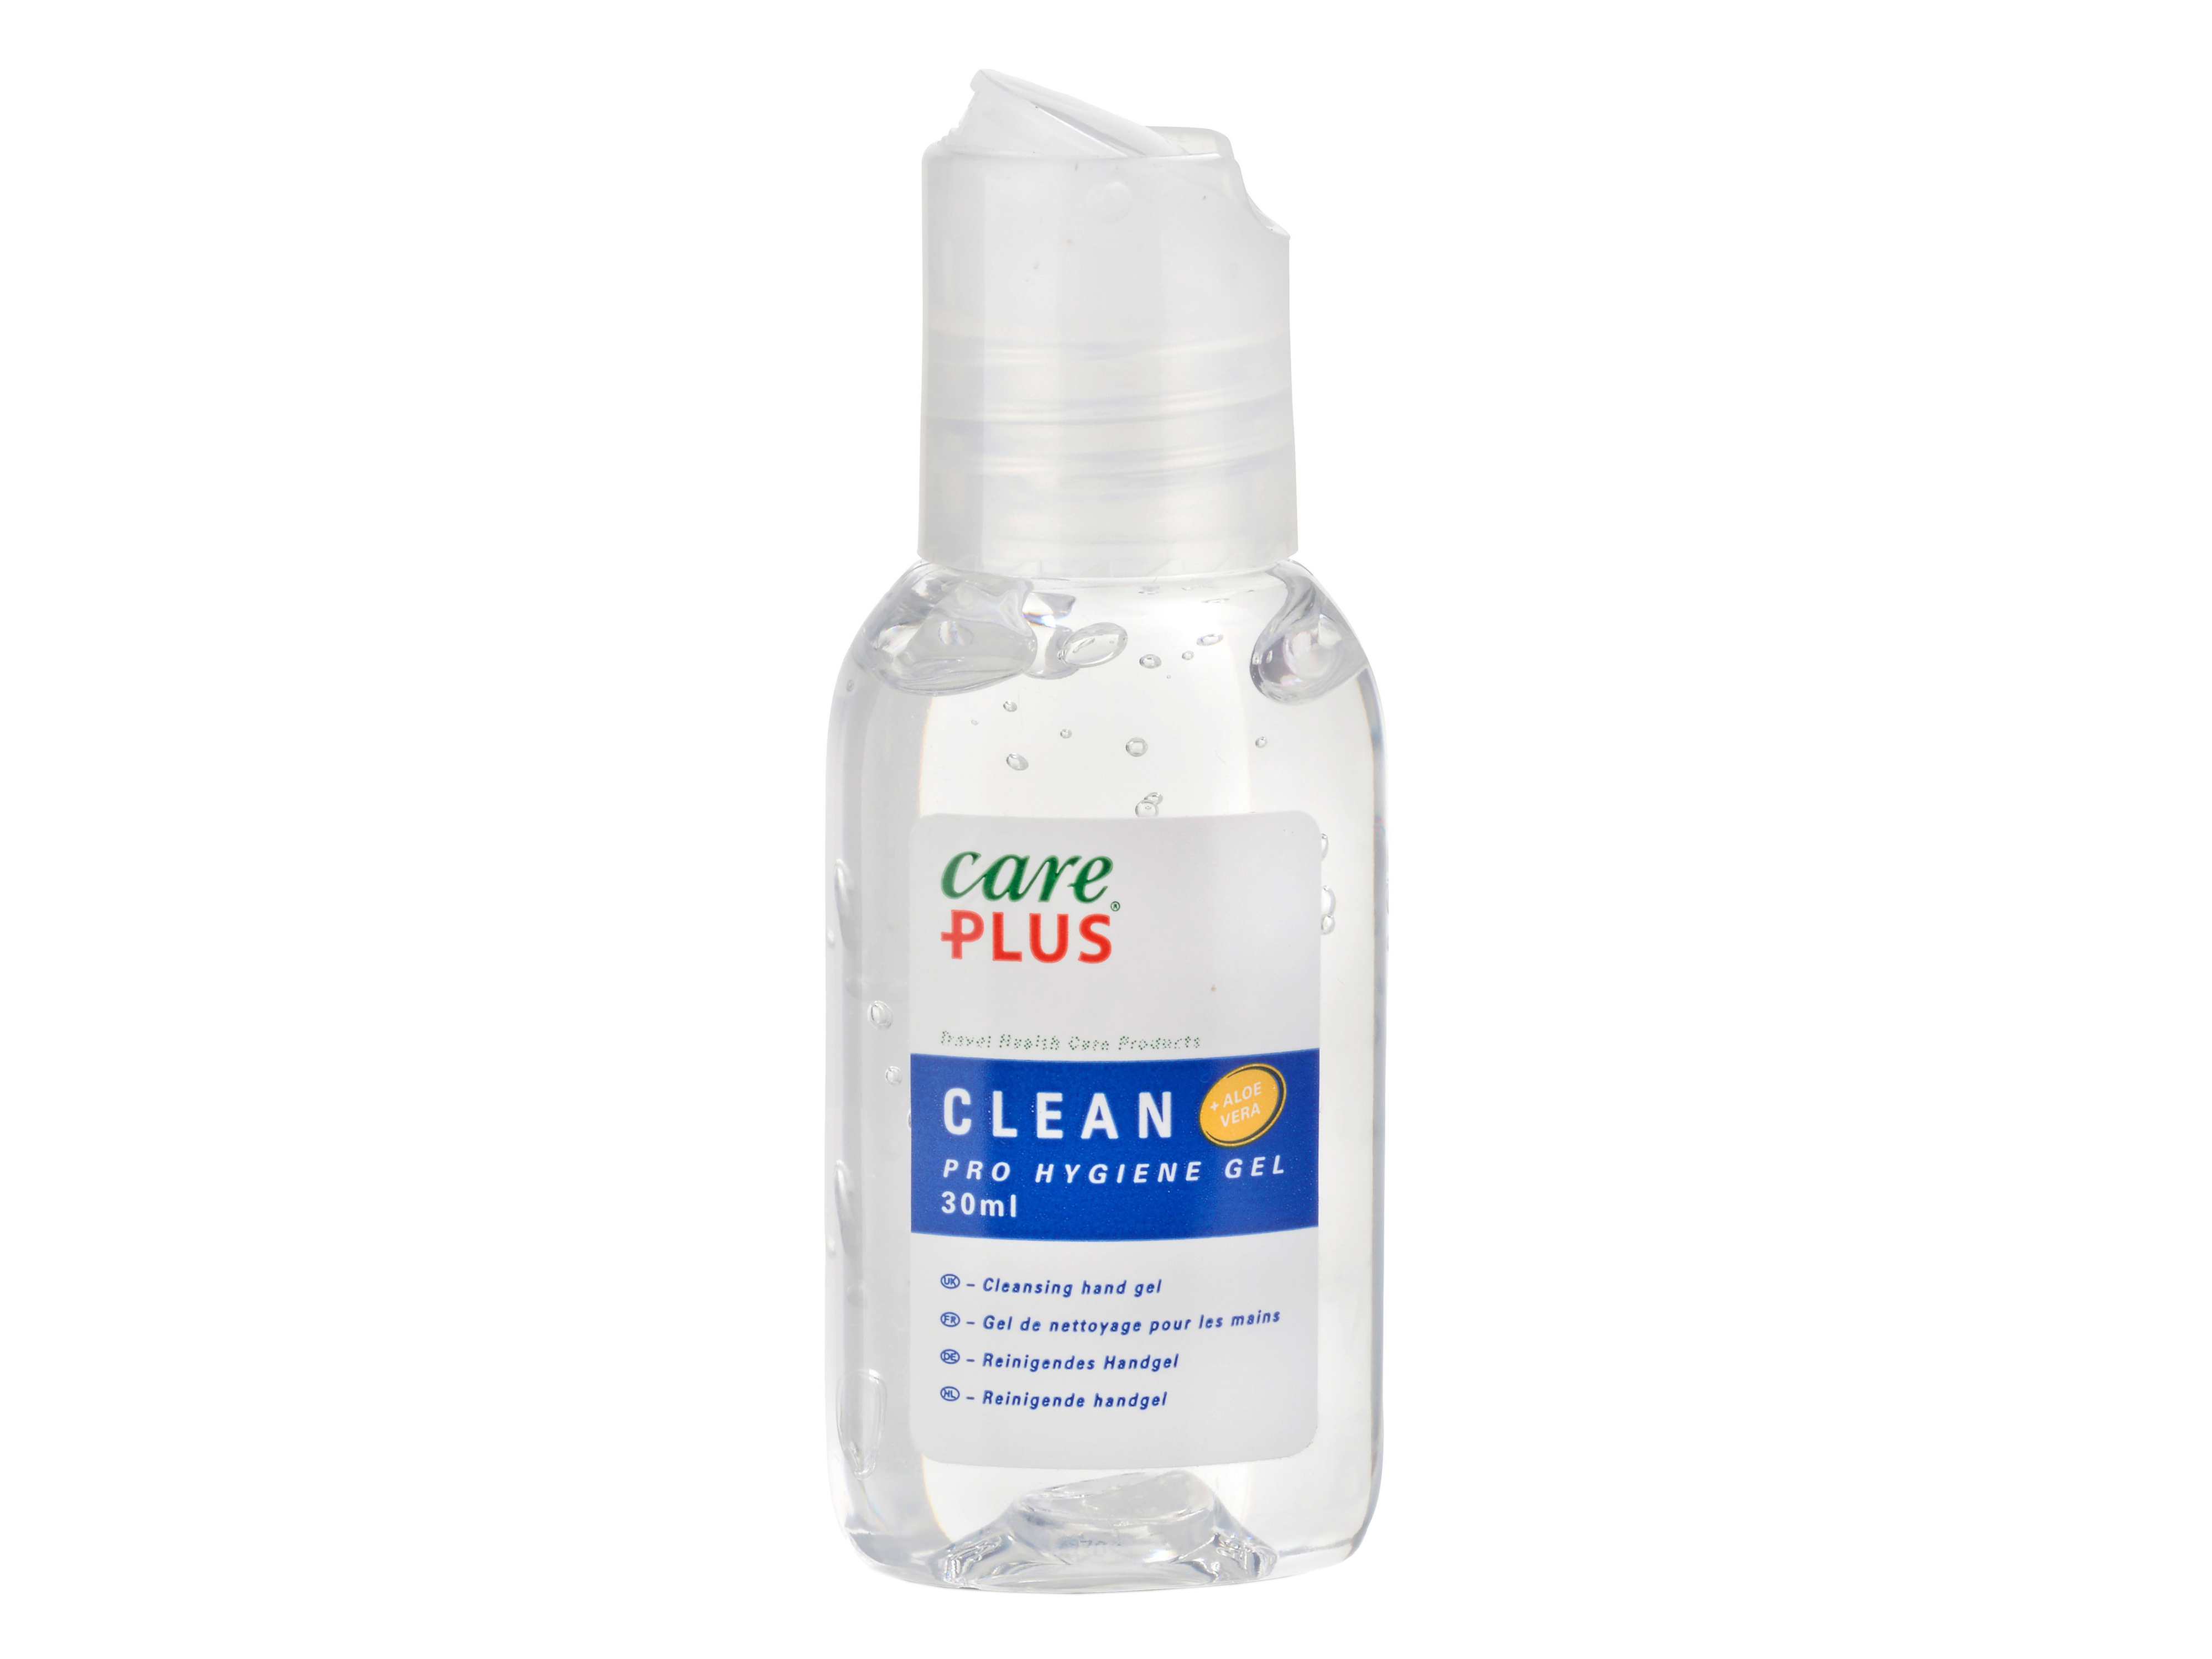 Care Plus Pro Hygiene Gel, 30 ml